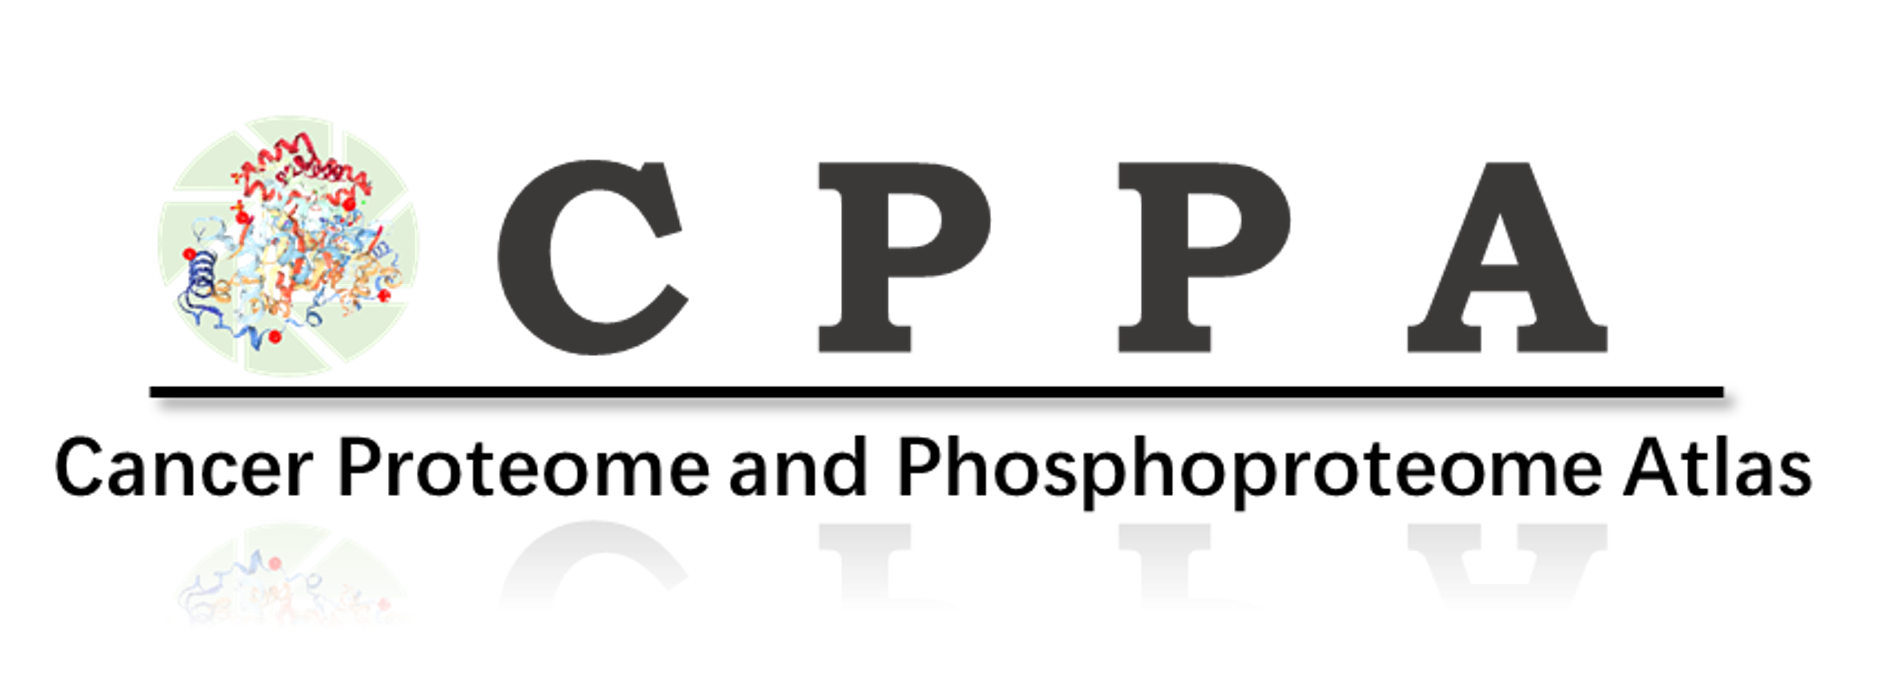 tppa_logo.png